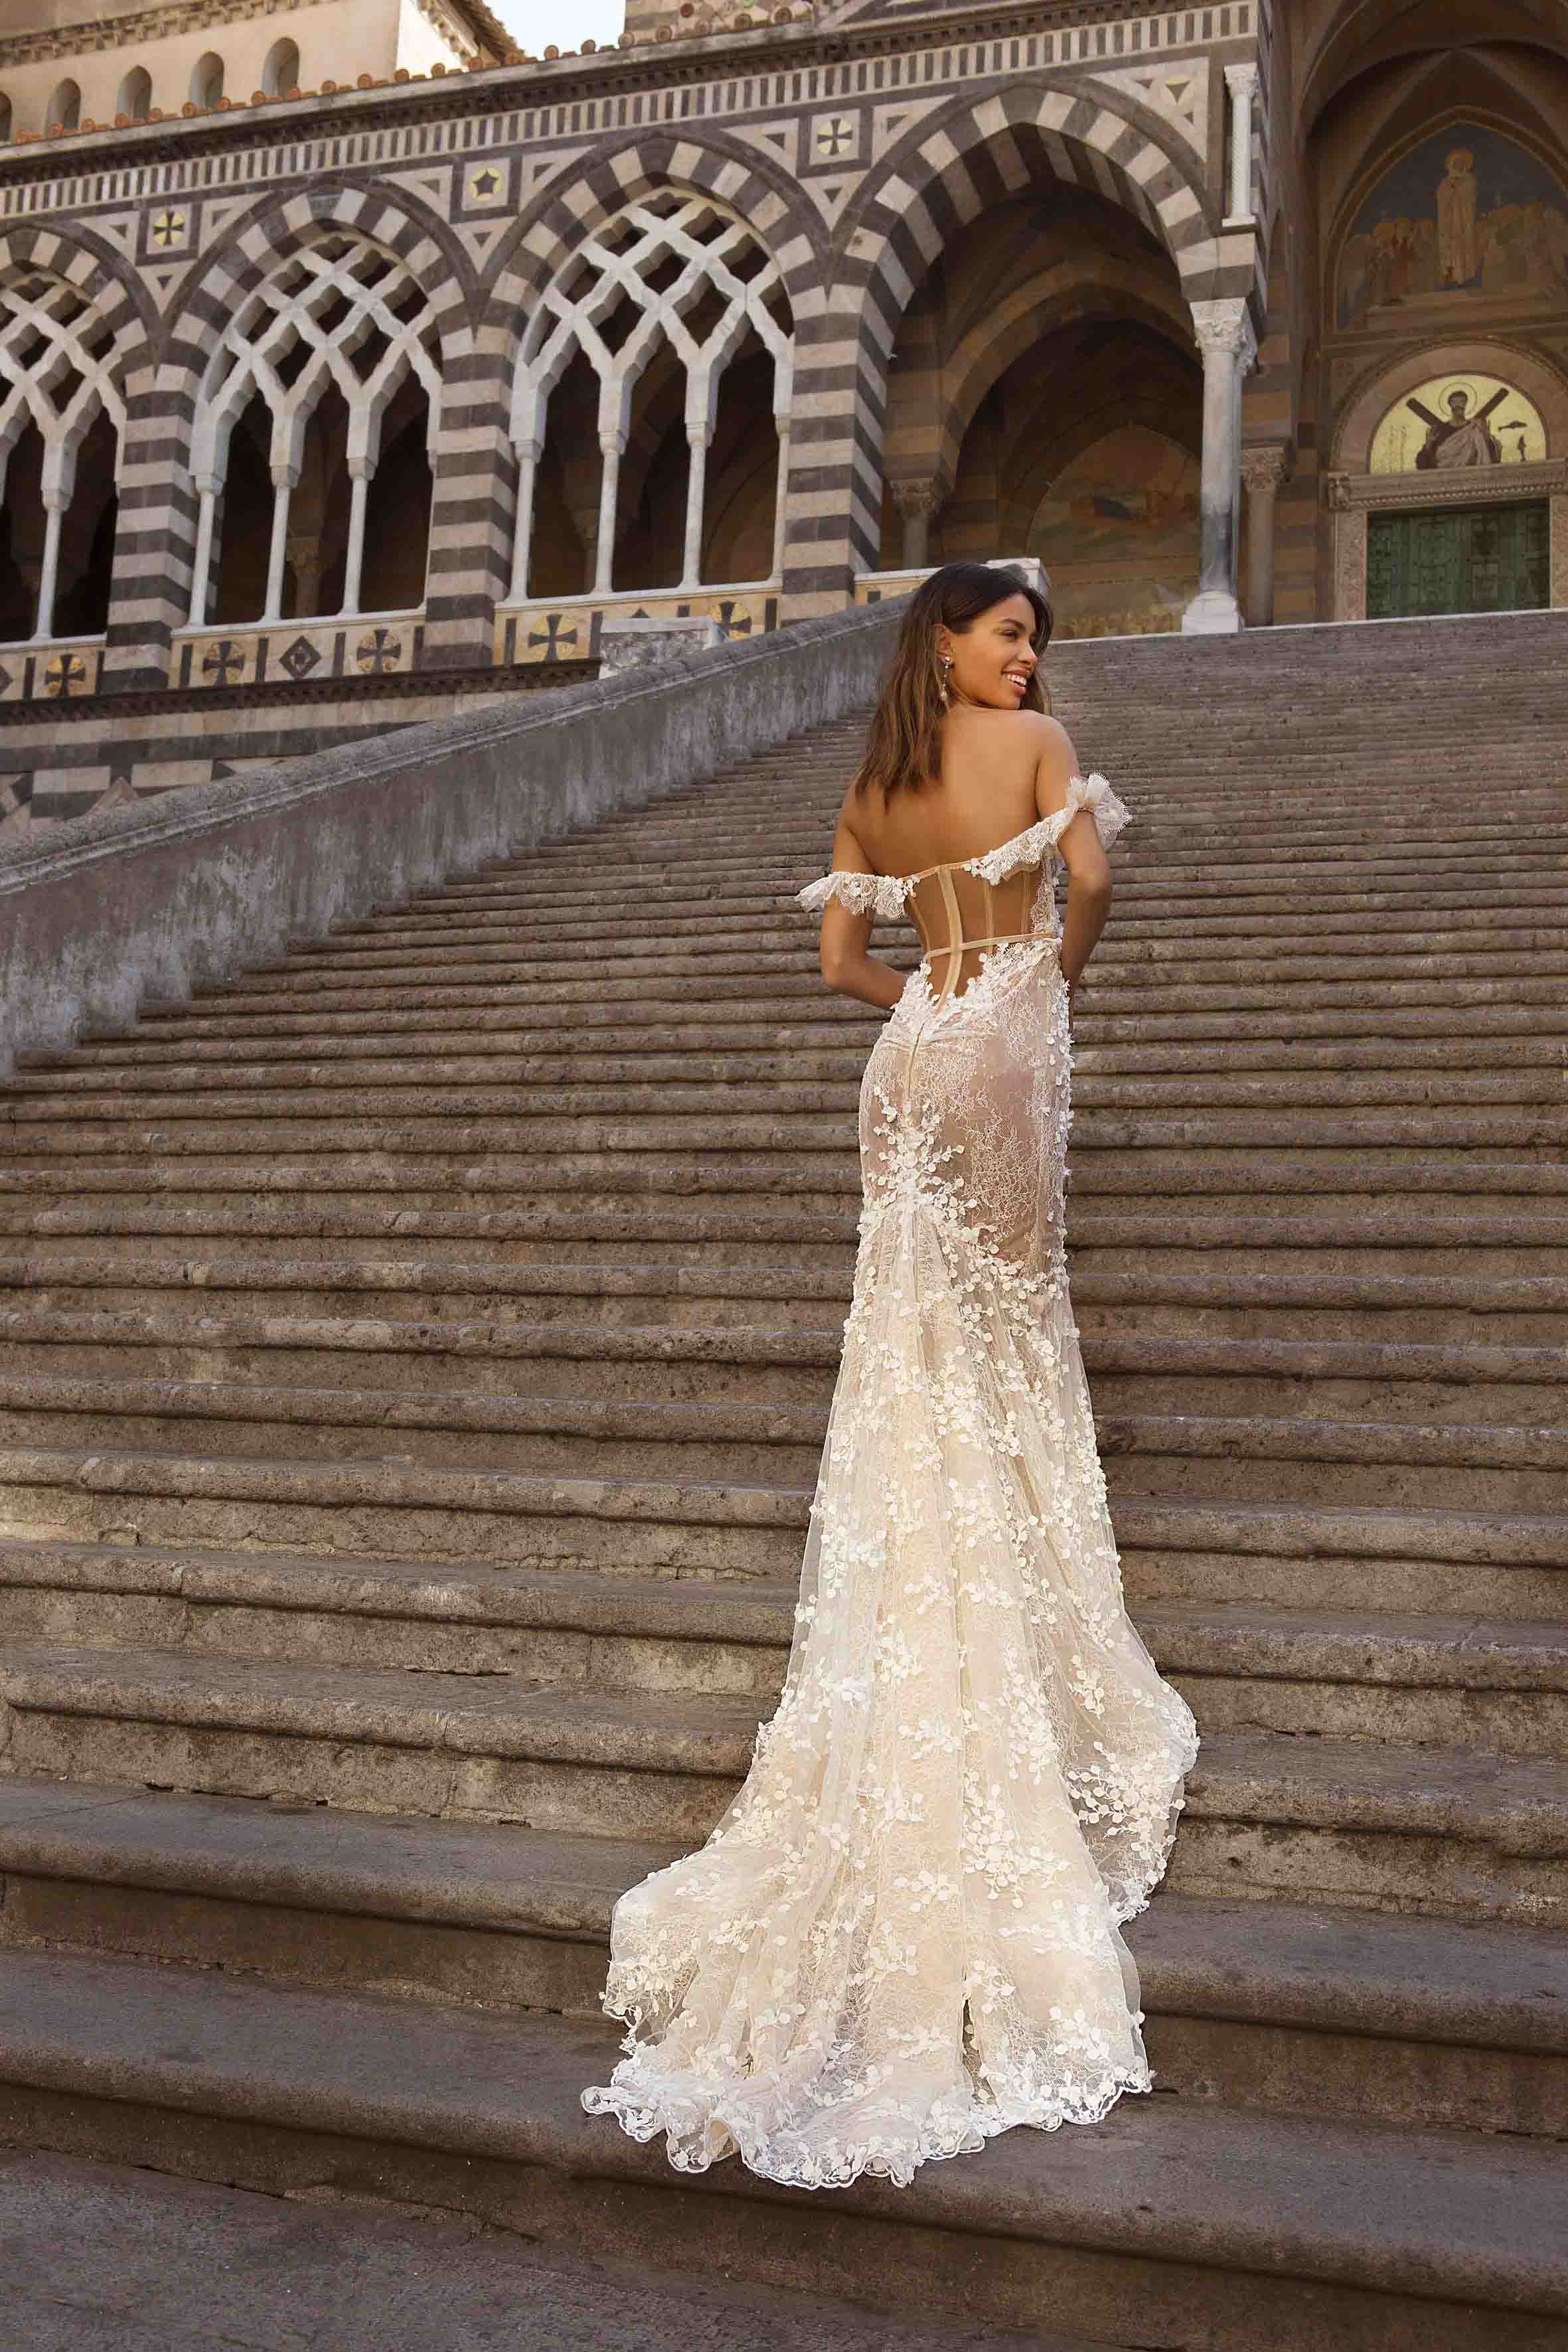 3D Lace Mermaid Wedding Dress Corset Sweetheart Neck Bride Dresses Off the Shoulder Applique Bridal Gowns